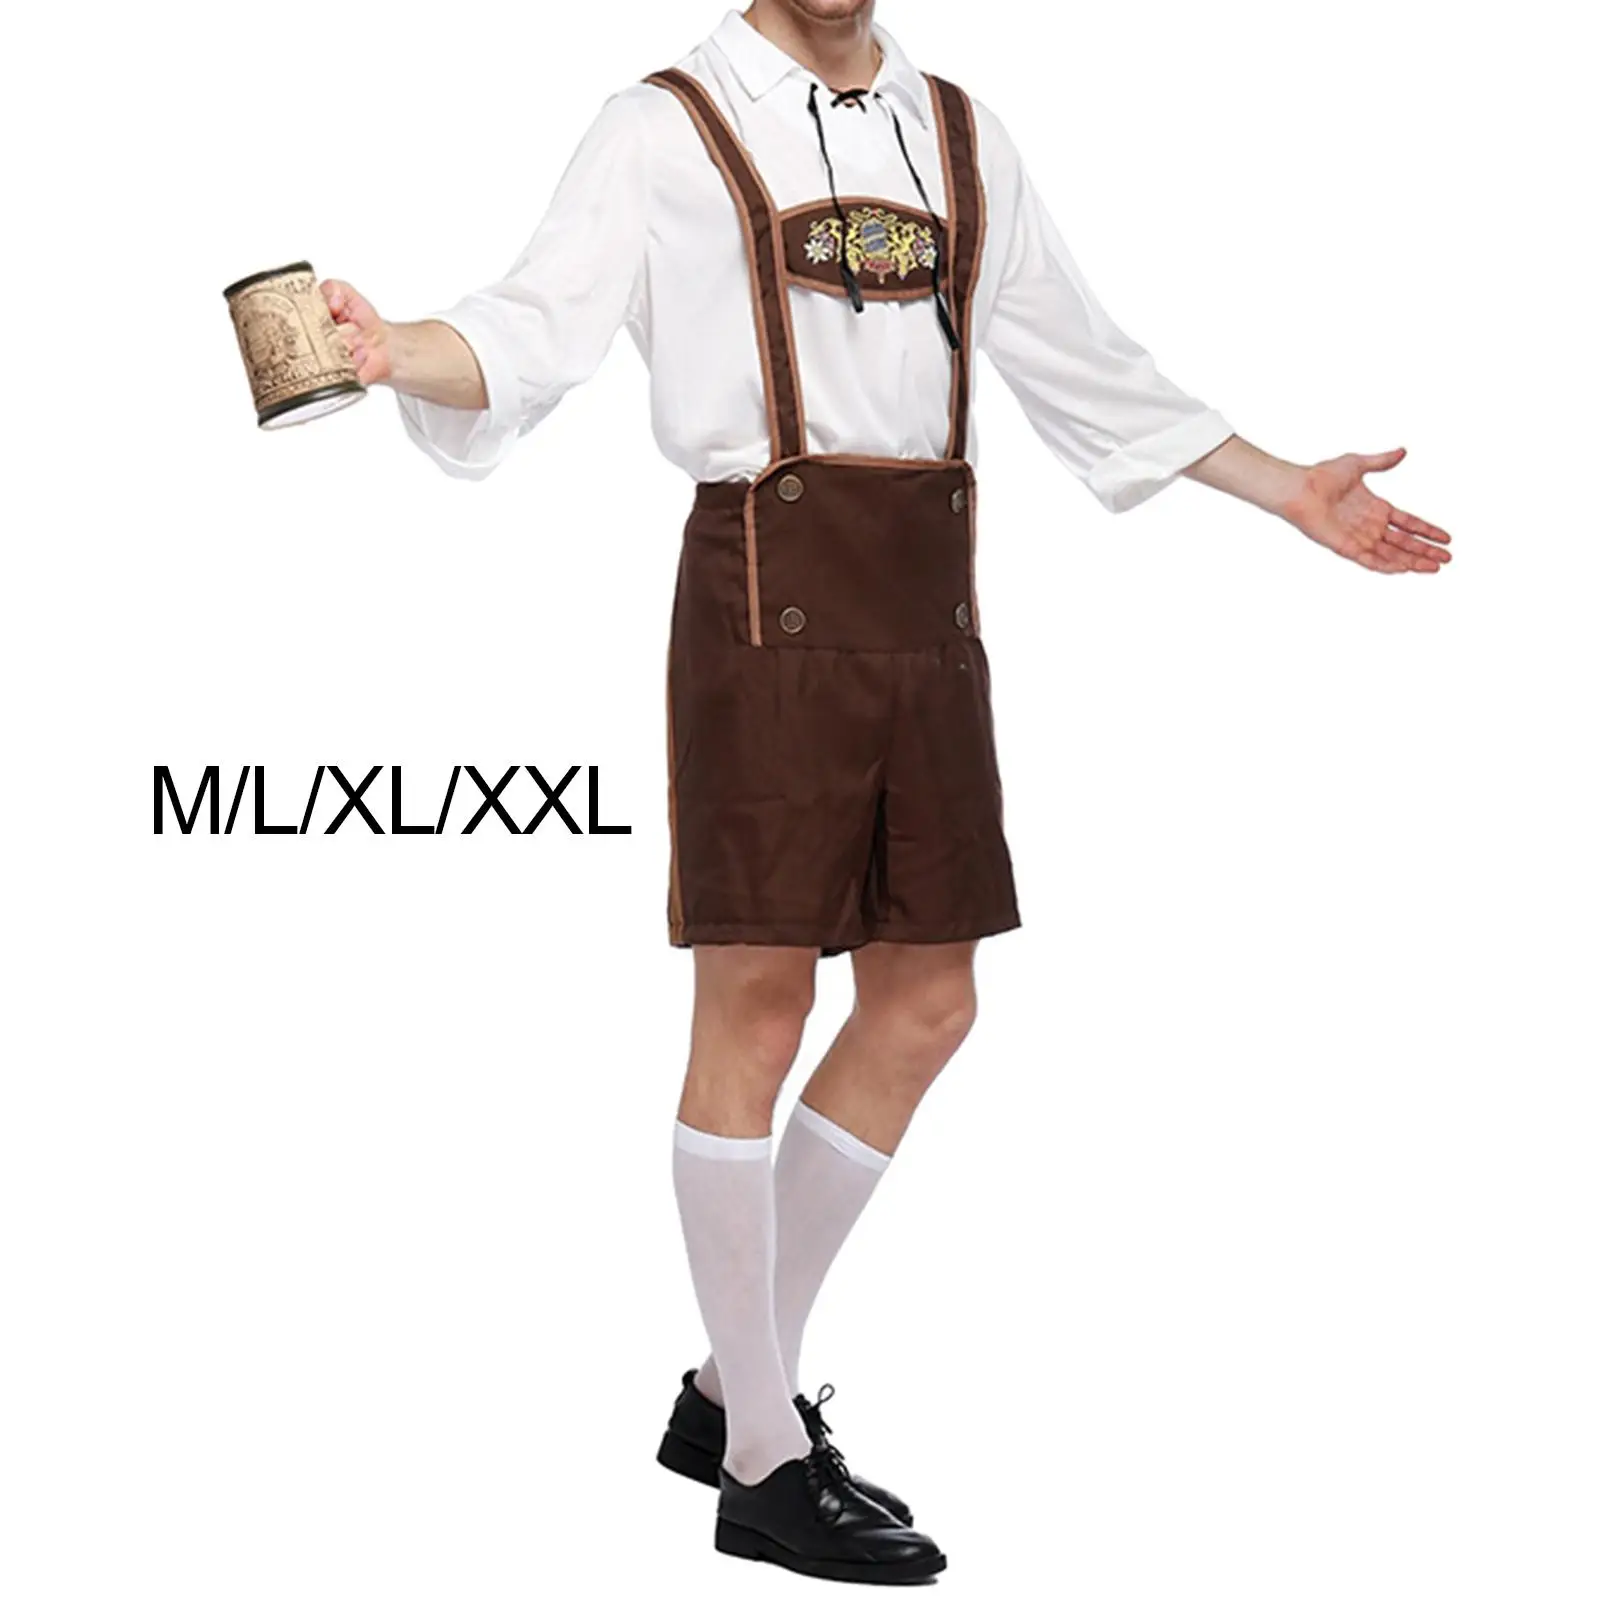 Beer Lederhosen Costume Halloween Bavarian Carnival Party Cosplay Suspenders Shorts